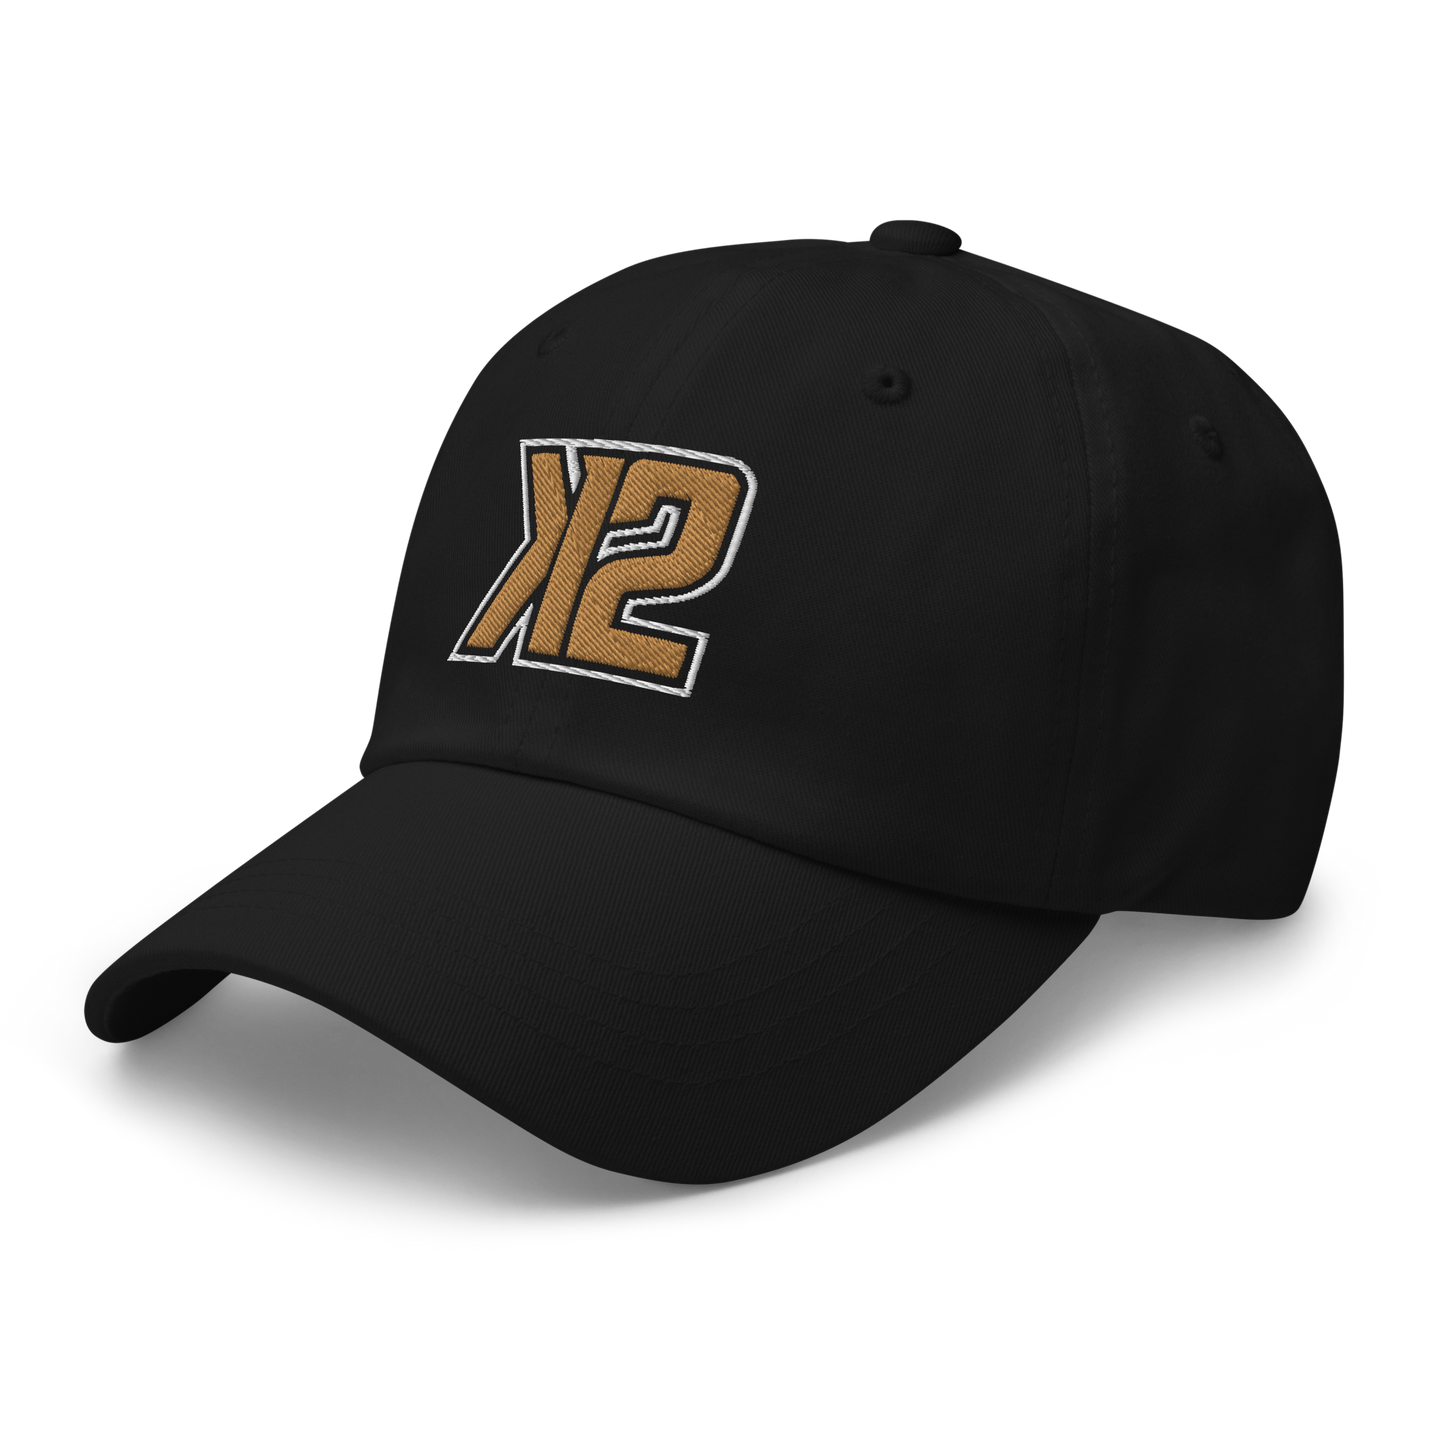 K2 PERFORMANCE CAP